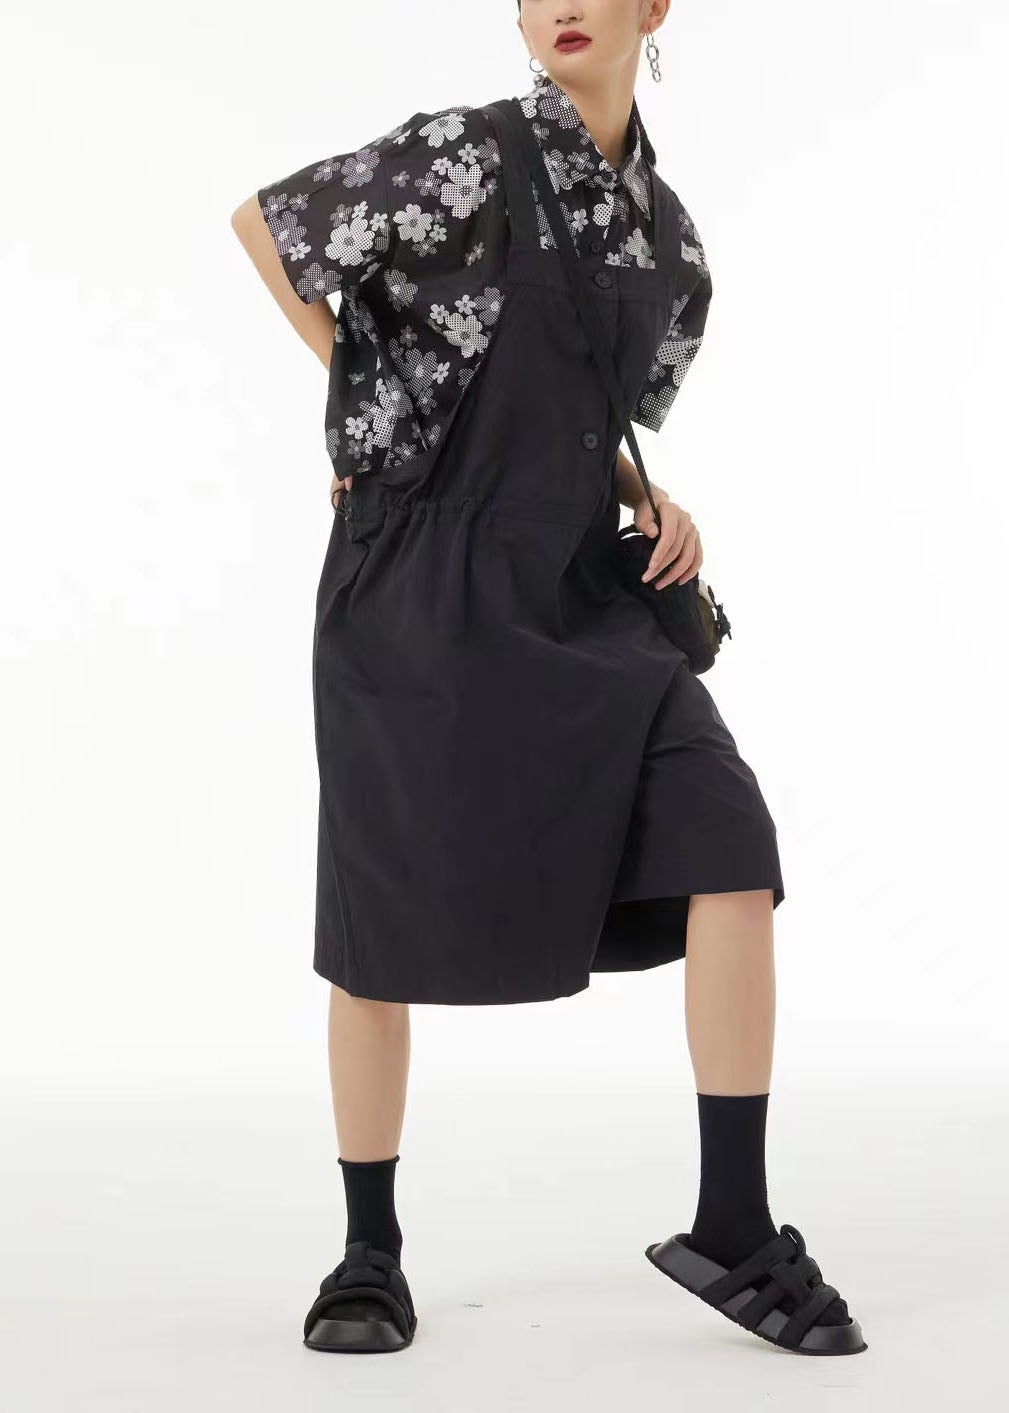 Bohemian Black Oversized Drawstring Cotton Overalls Jumpsuit Jumpsuits Summer TS1036